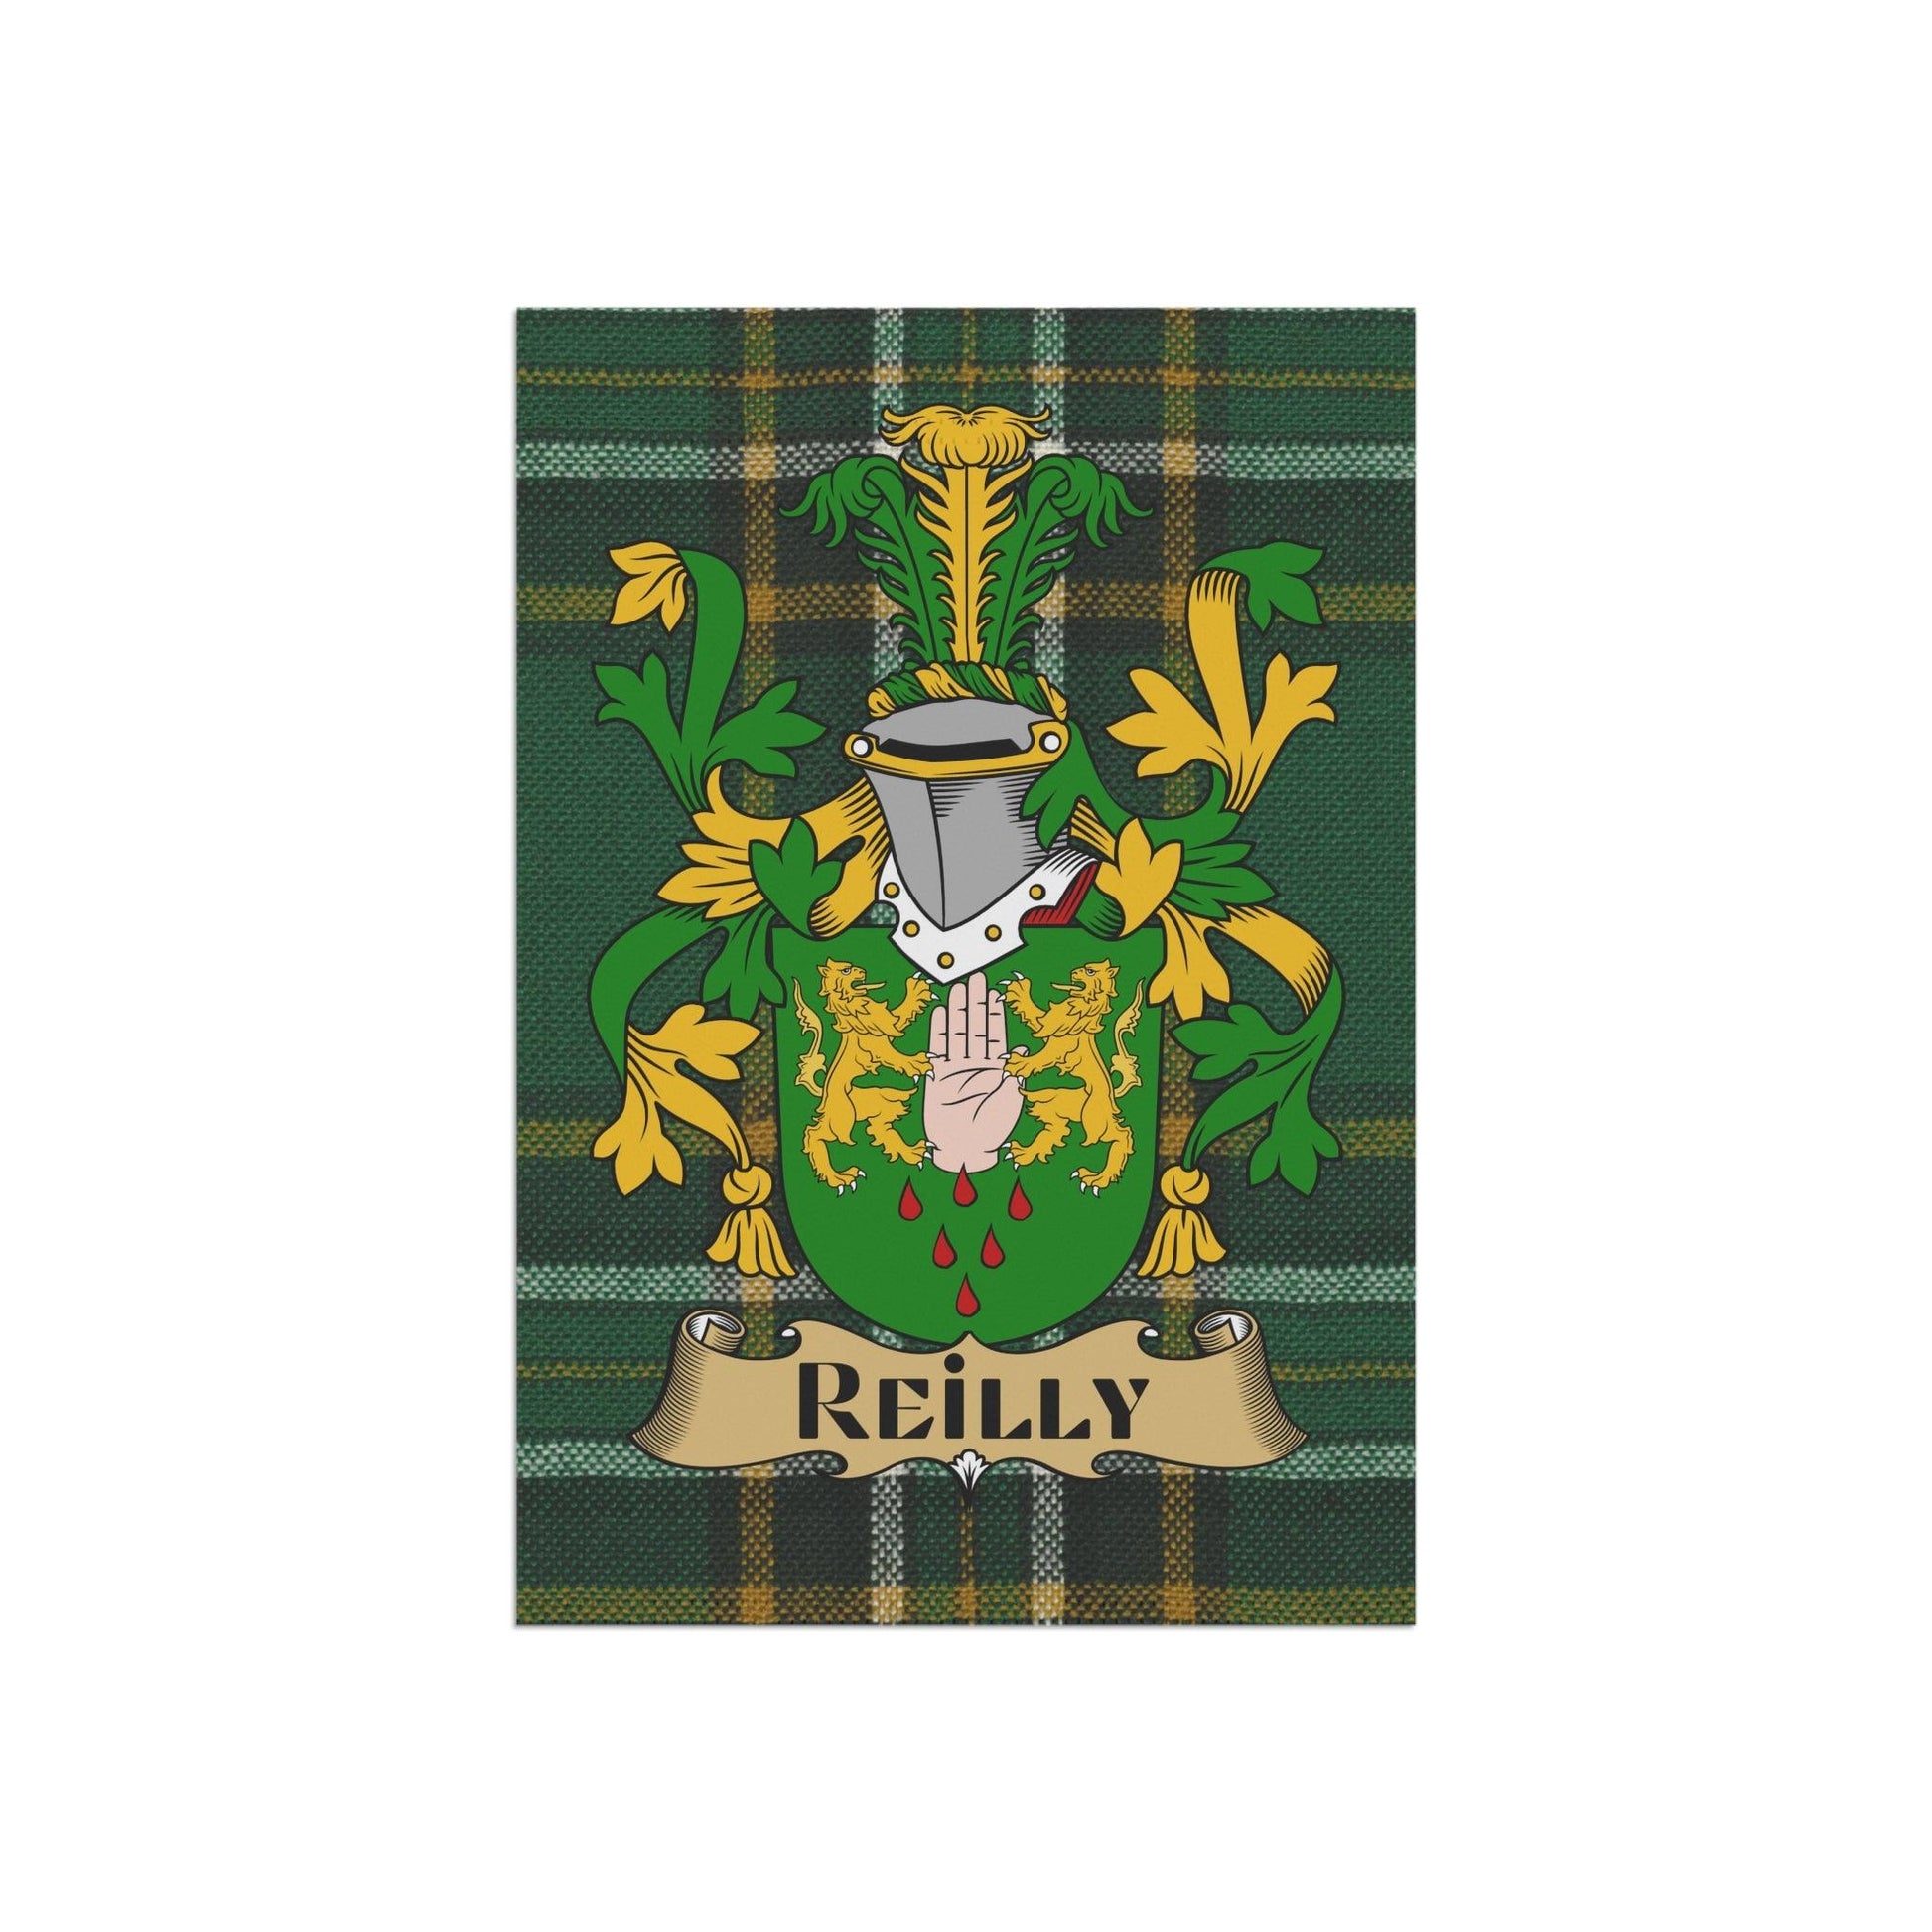 Reilly Coat Of Arms Irish Garden Flag